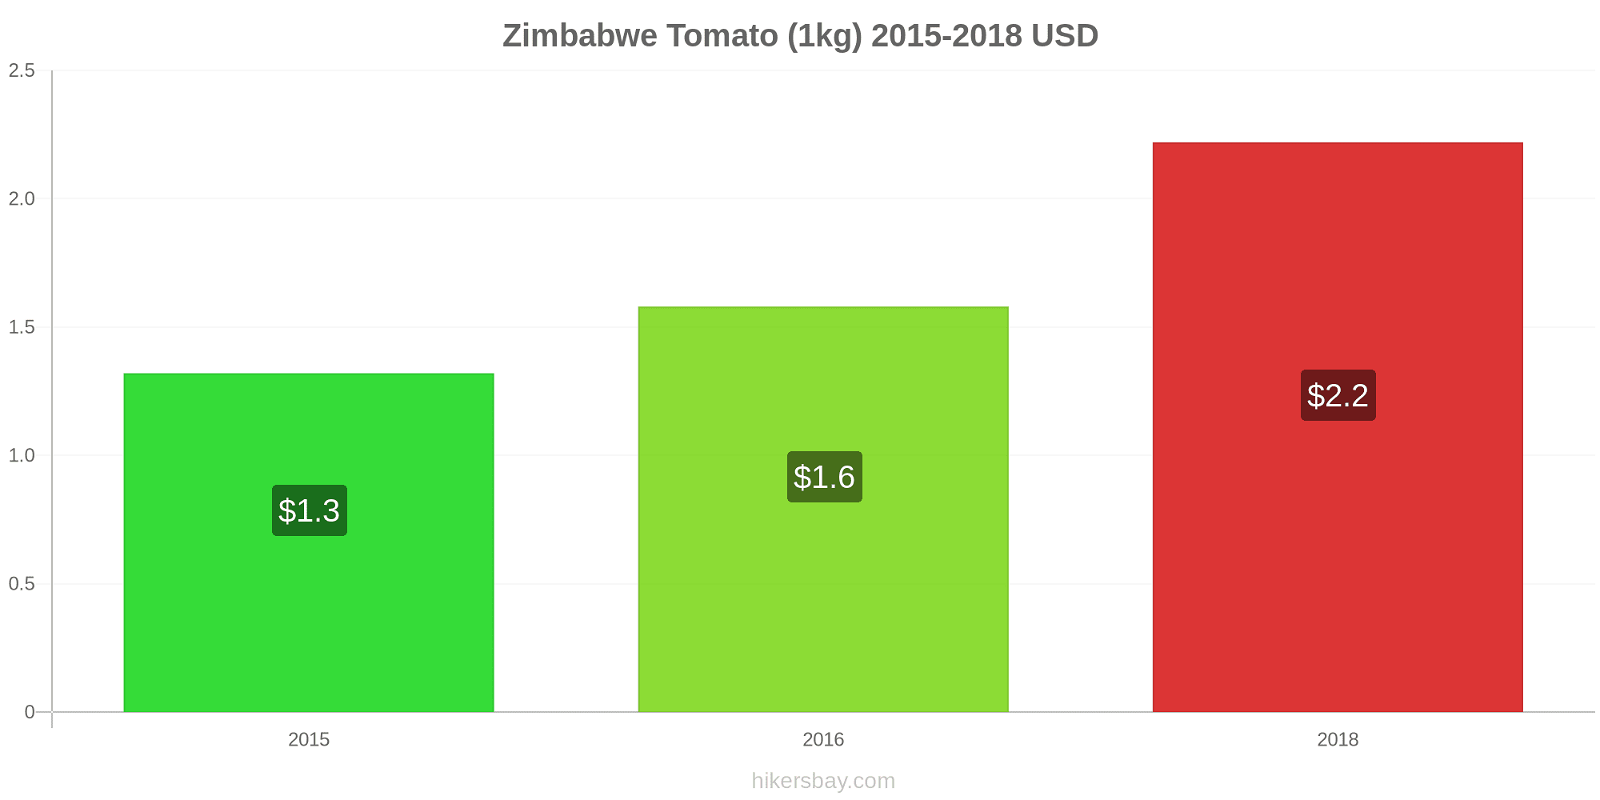 Zimbabwe price changes Tomato (1kg) hikersbay.com